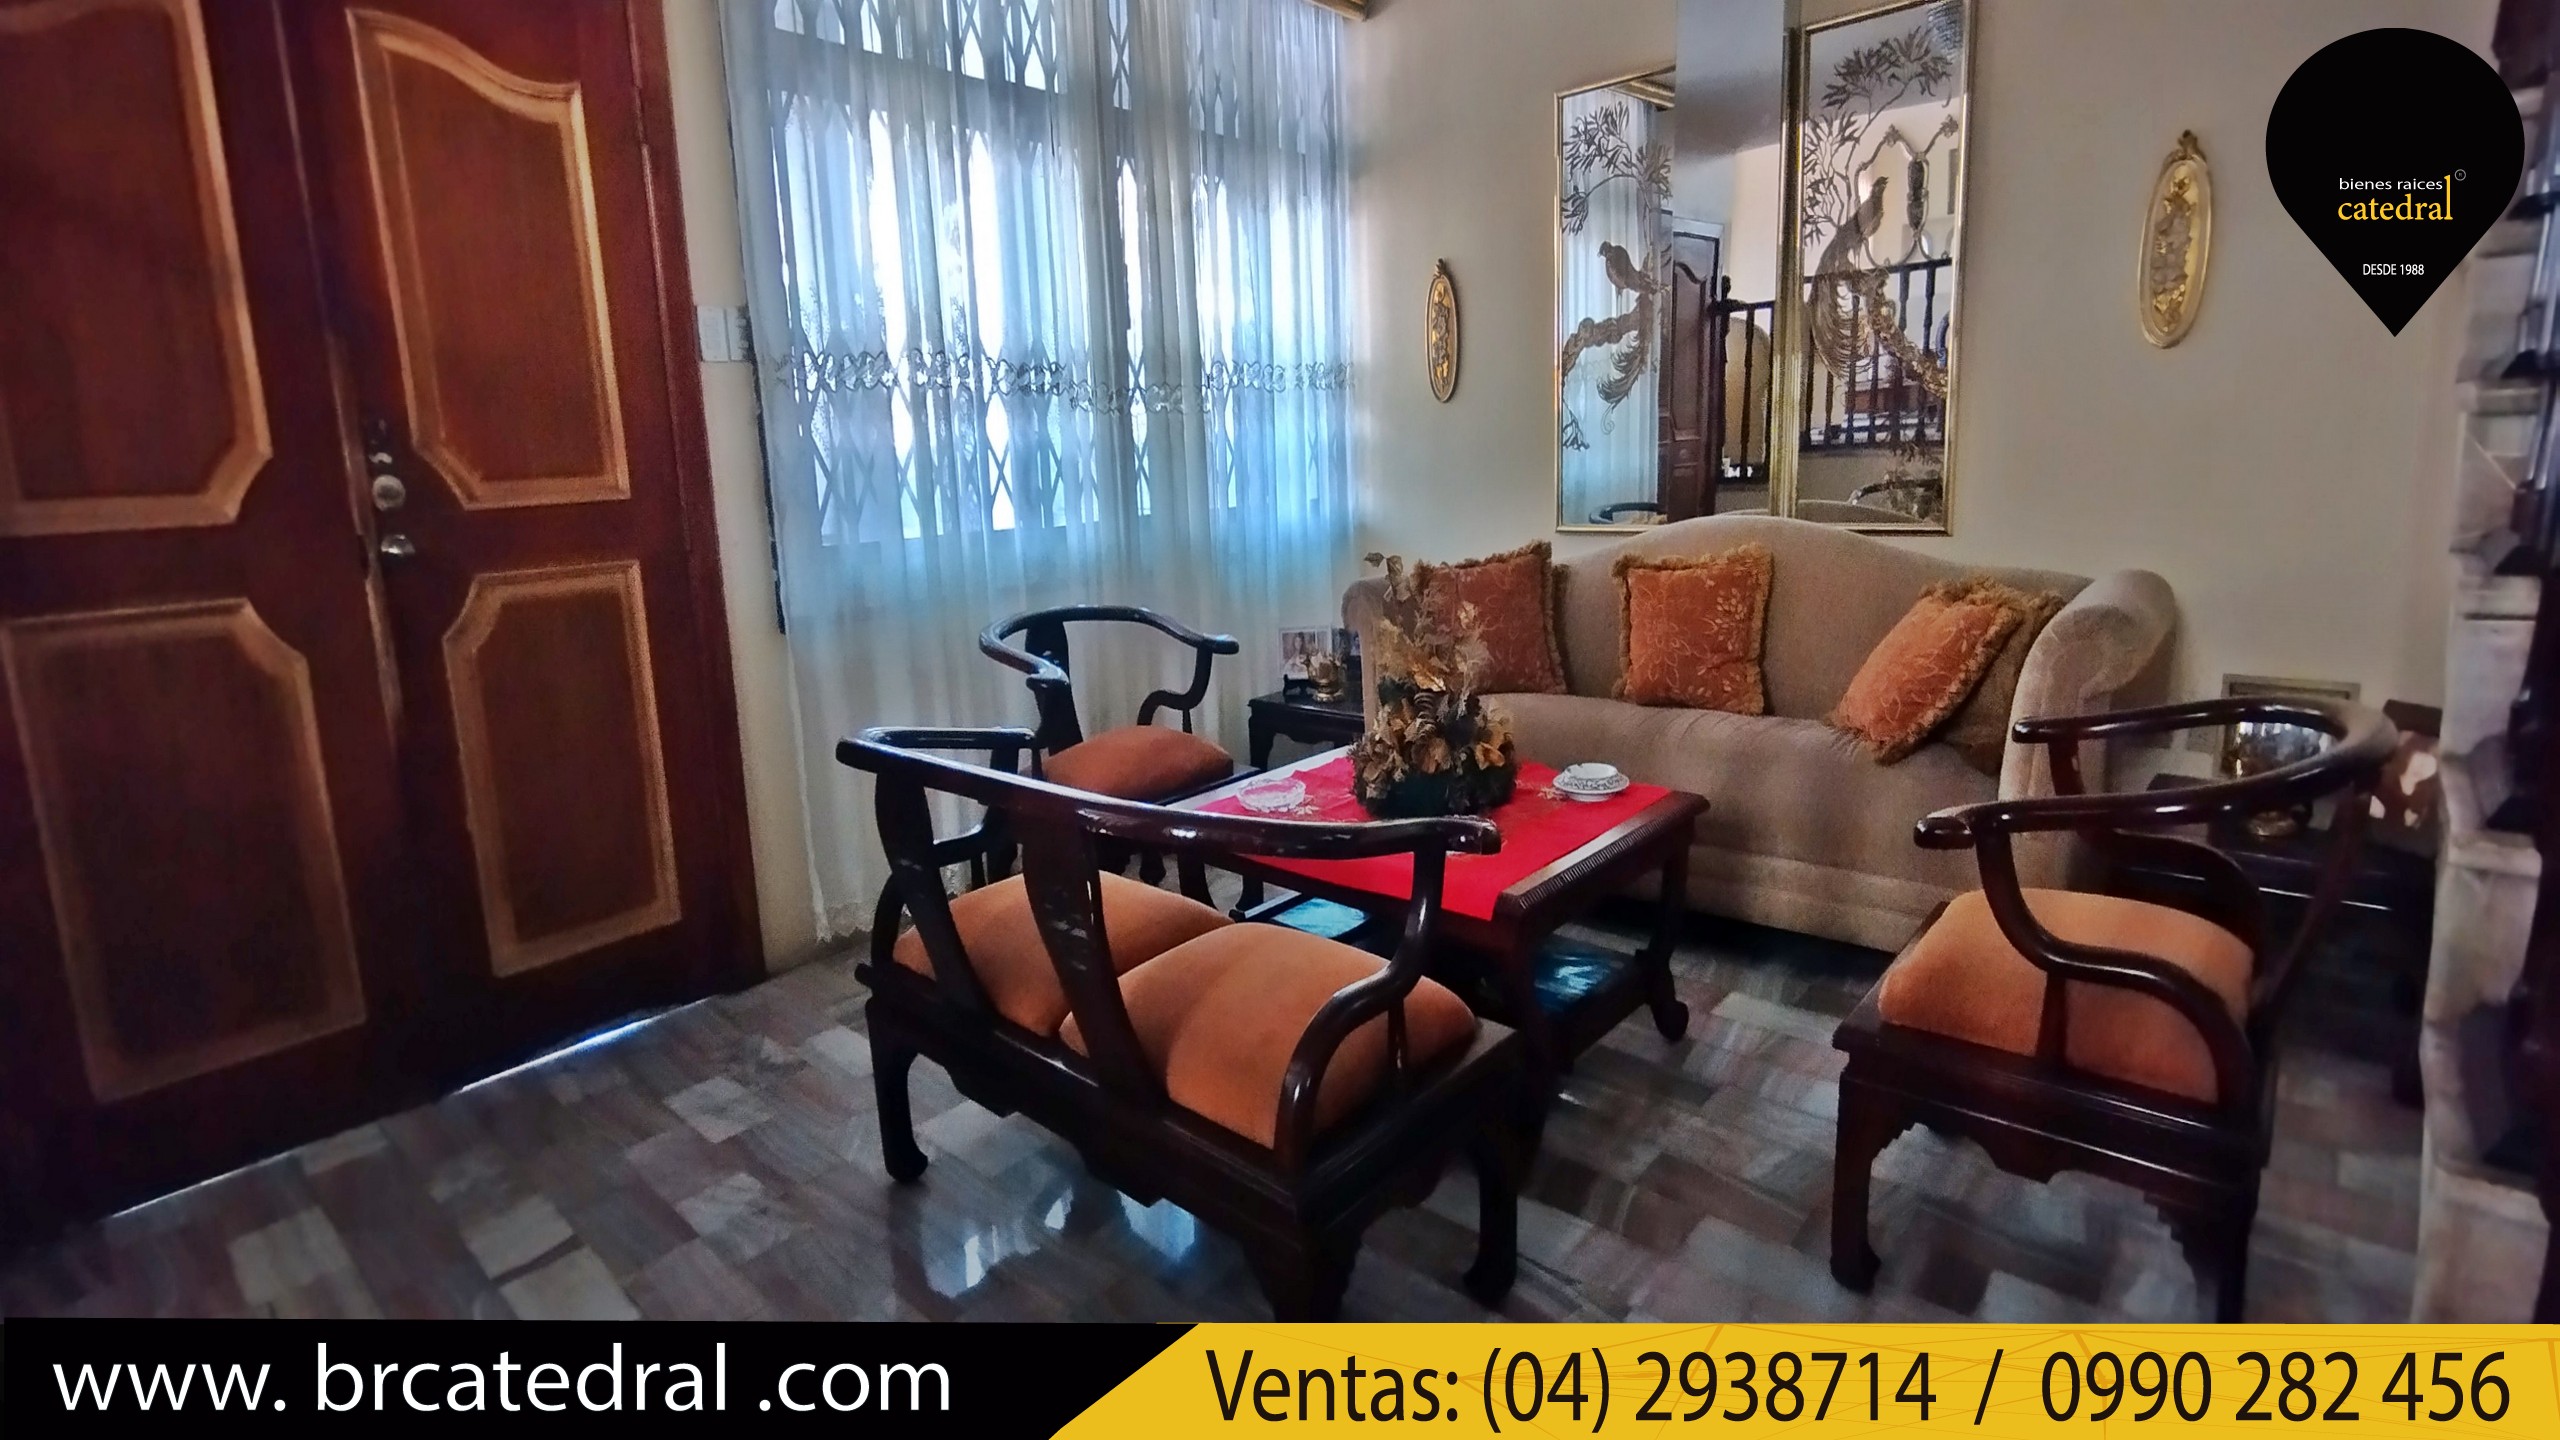 Villa Casa de Venta en Cuenca Ecuador sector Garzota - Etapa 1